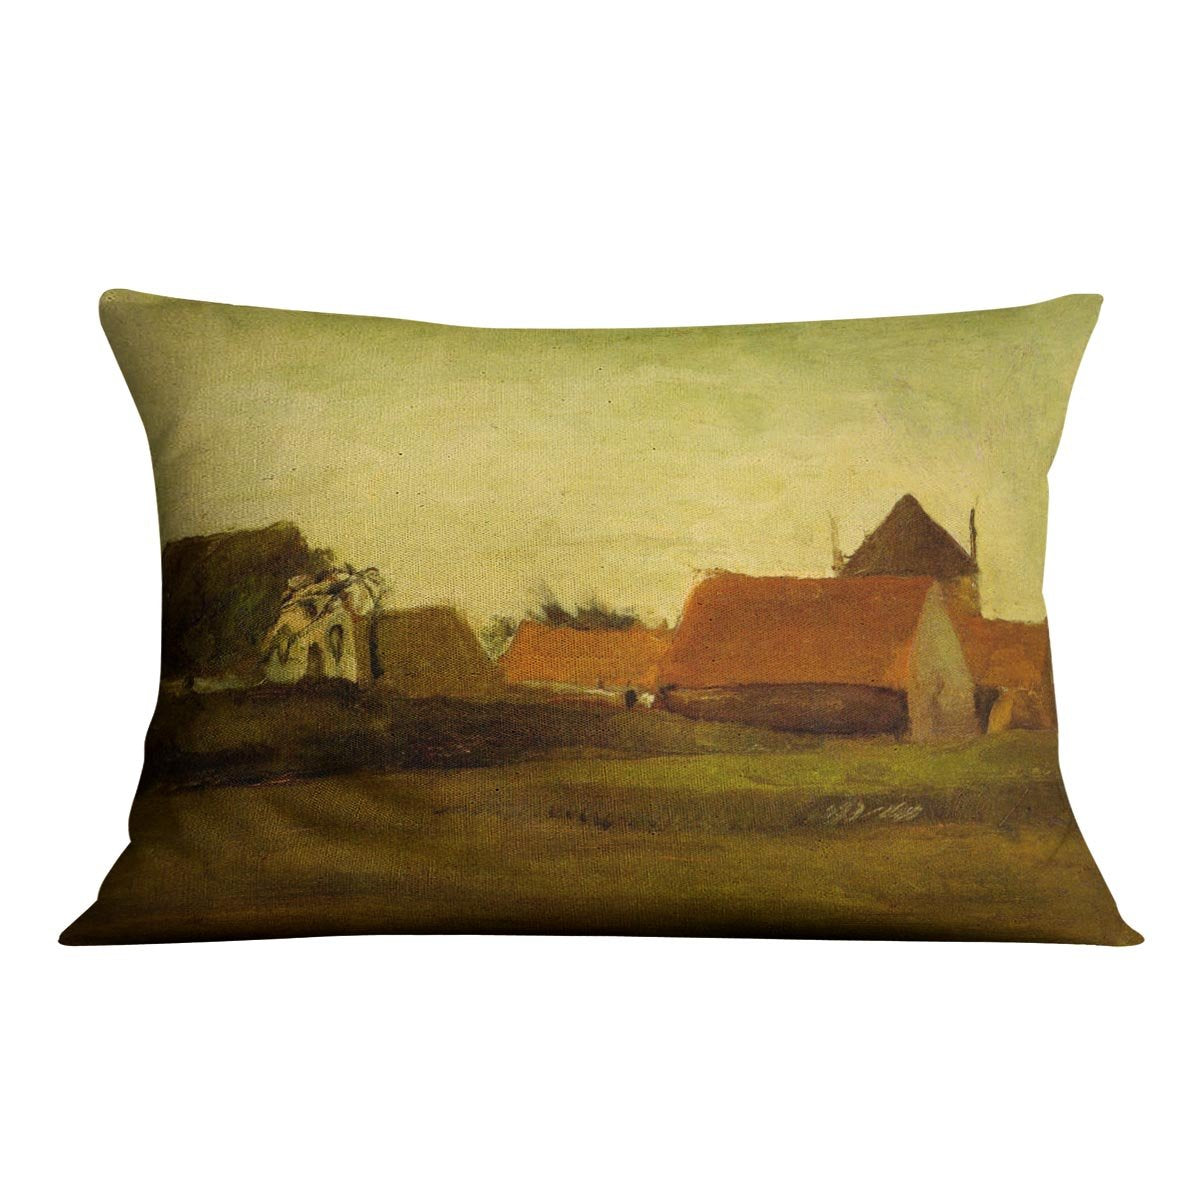 Farmhouses in Loosduinen near The Hague at Twilight by Van Gogh Throw Pillow